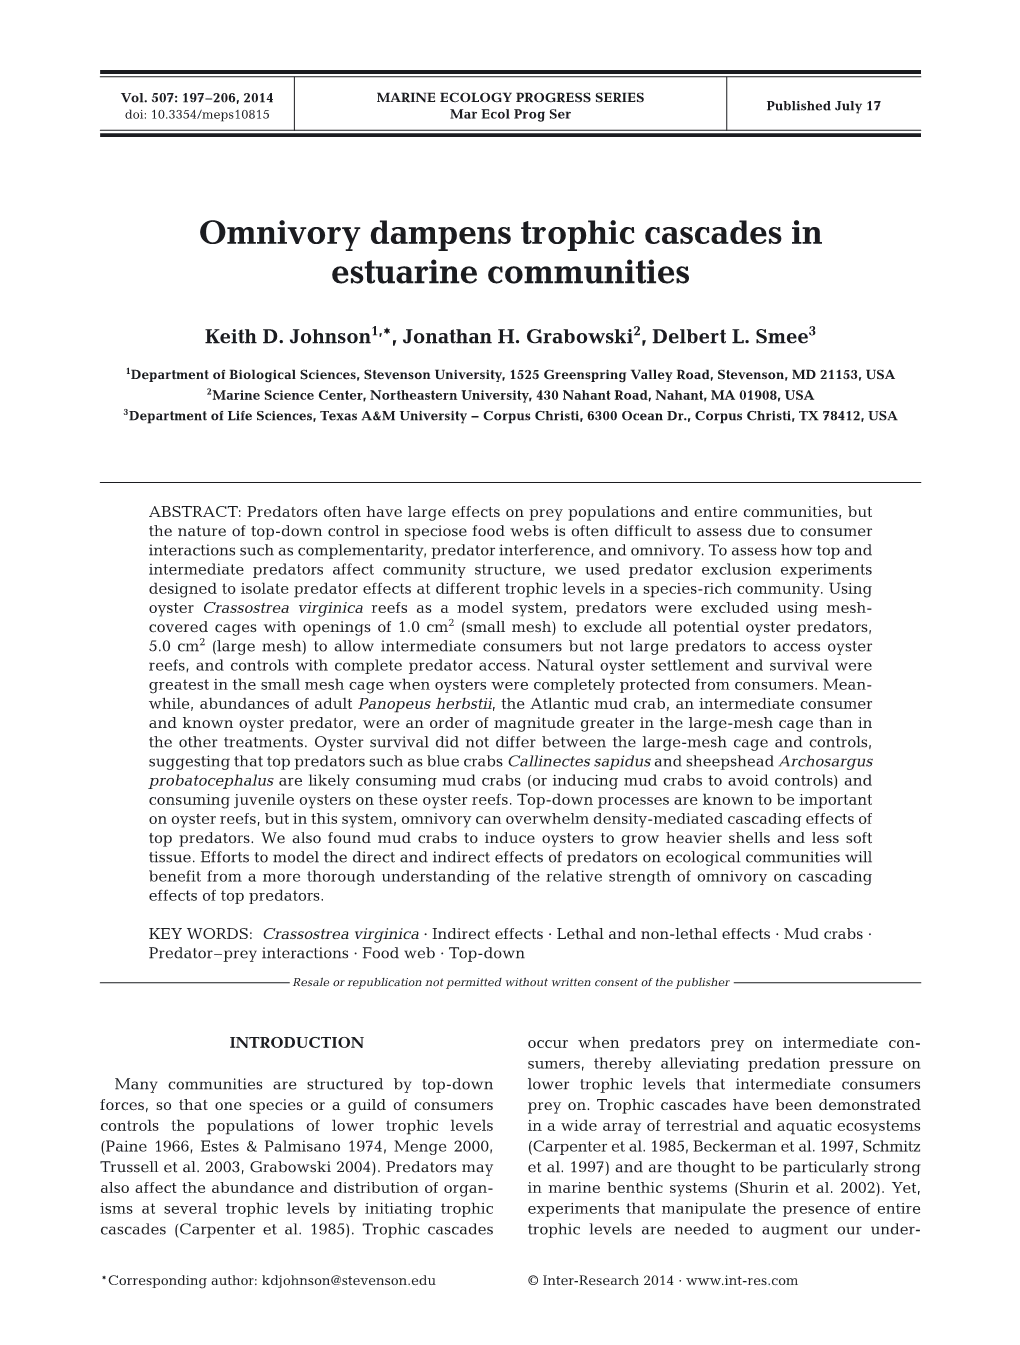 Omnivory Dampens Trophic Cascades in Estuarine Communities